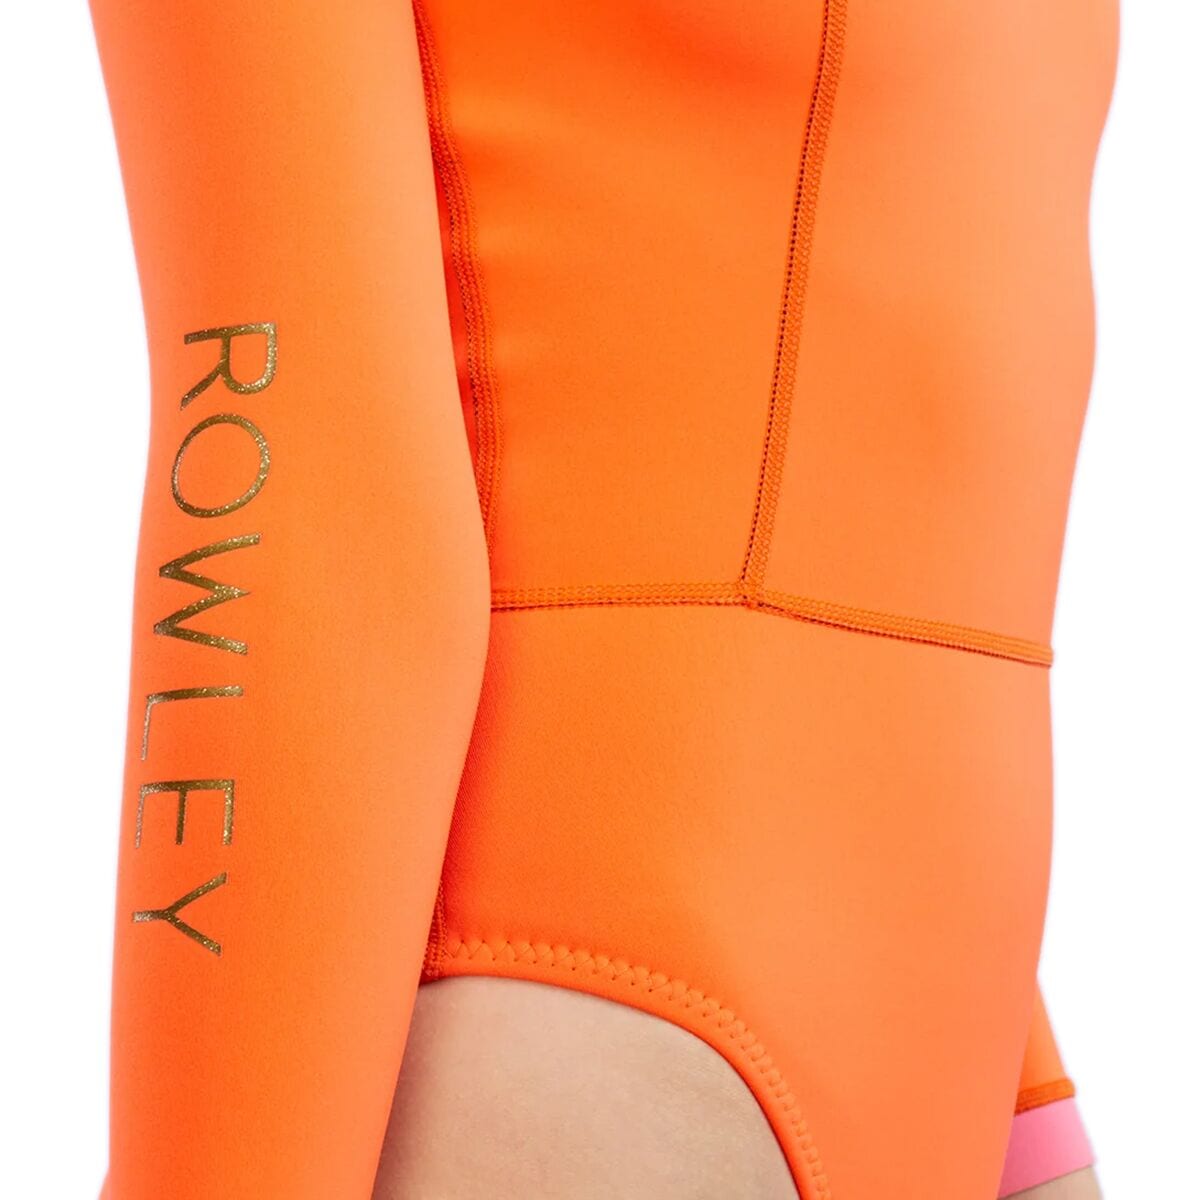 Cheeky Wetsuit – Cynthia Rowley